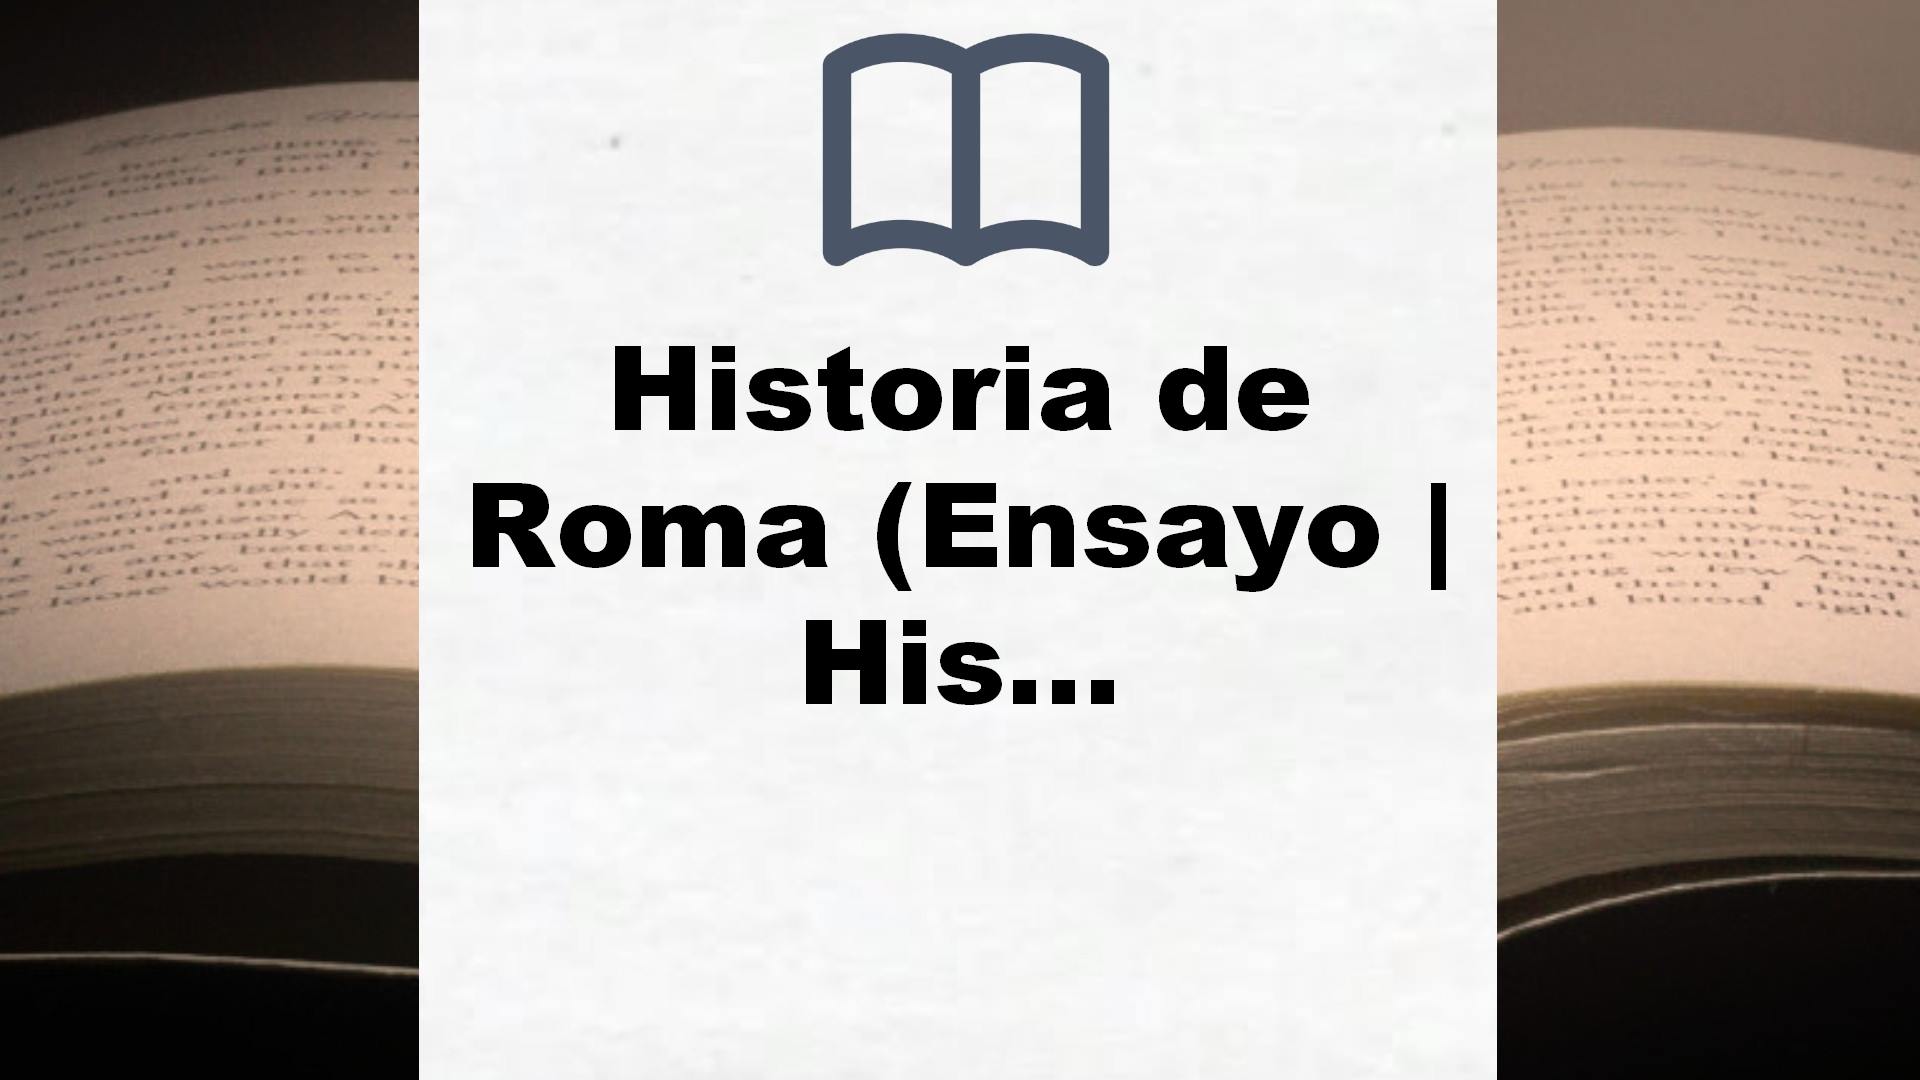 Historia de Roma (Ensayo | Historia) – Reseña del libro